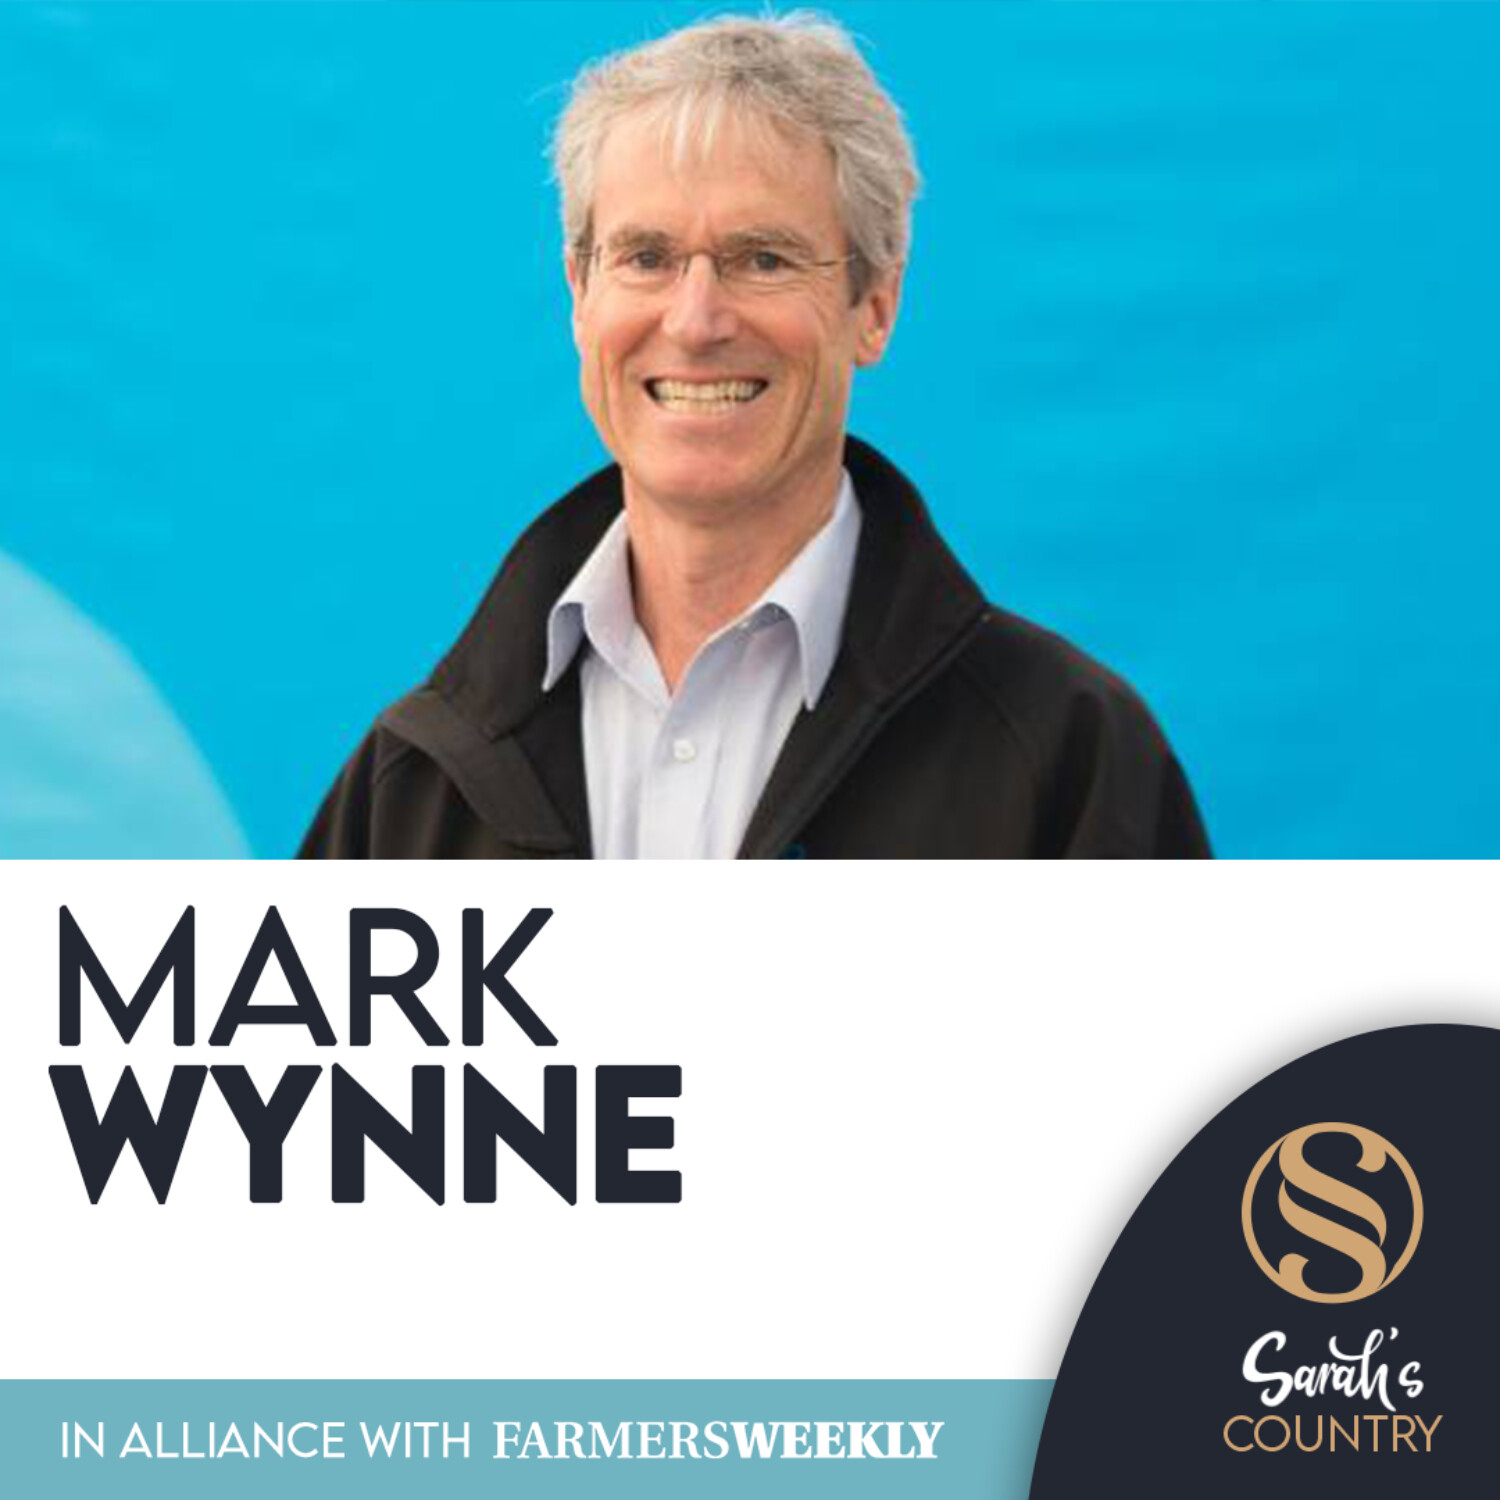 Mark Wynne | “$25 million Future Ready Farms programme”